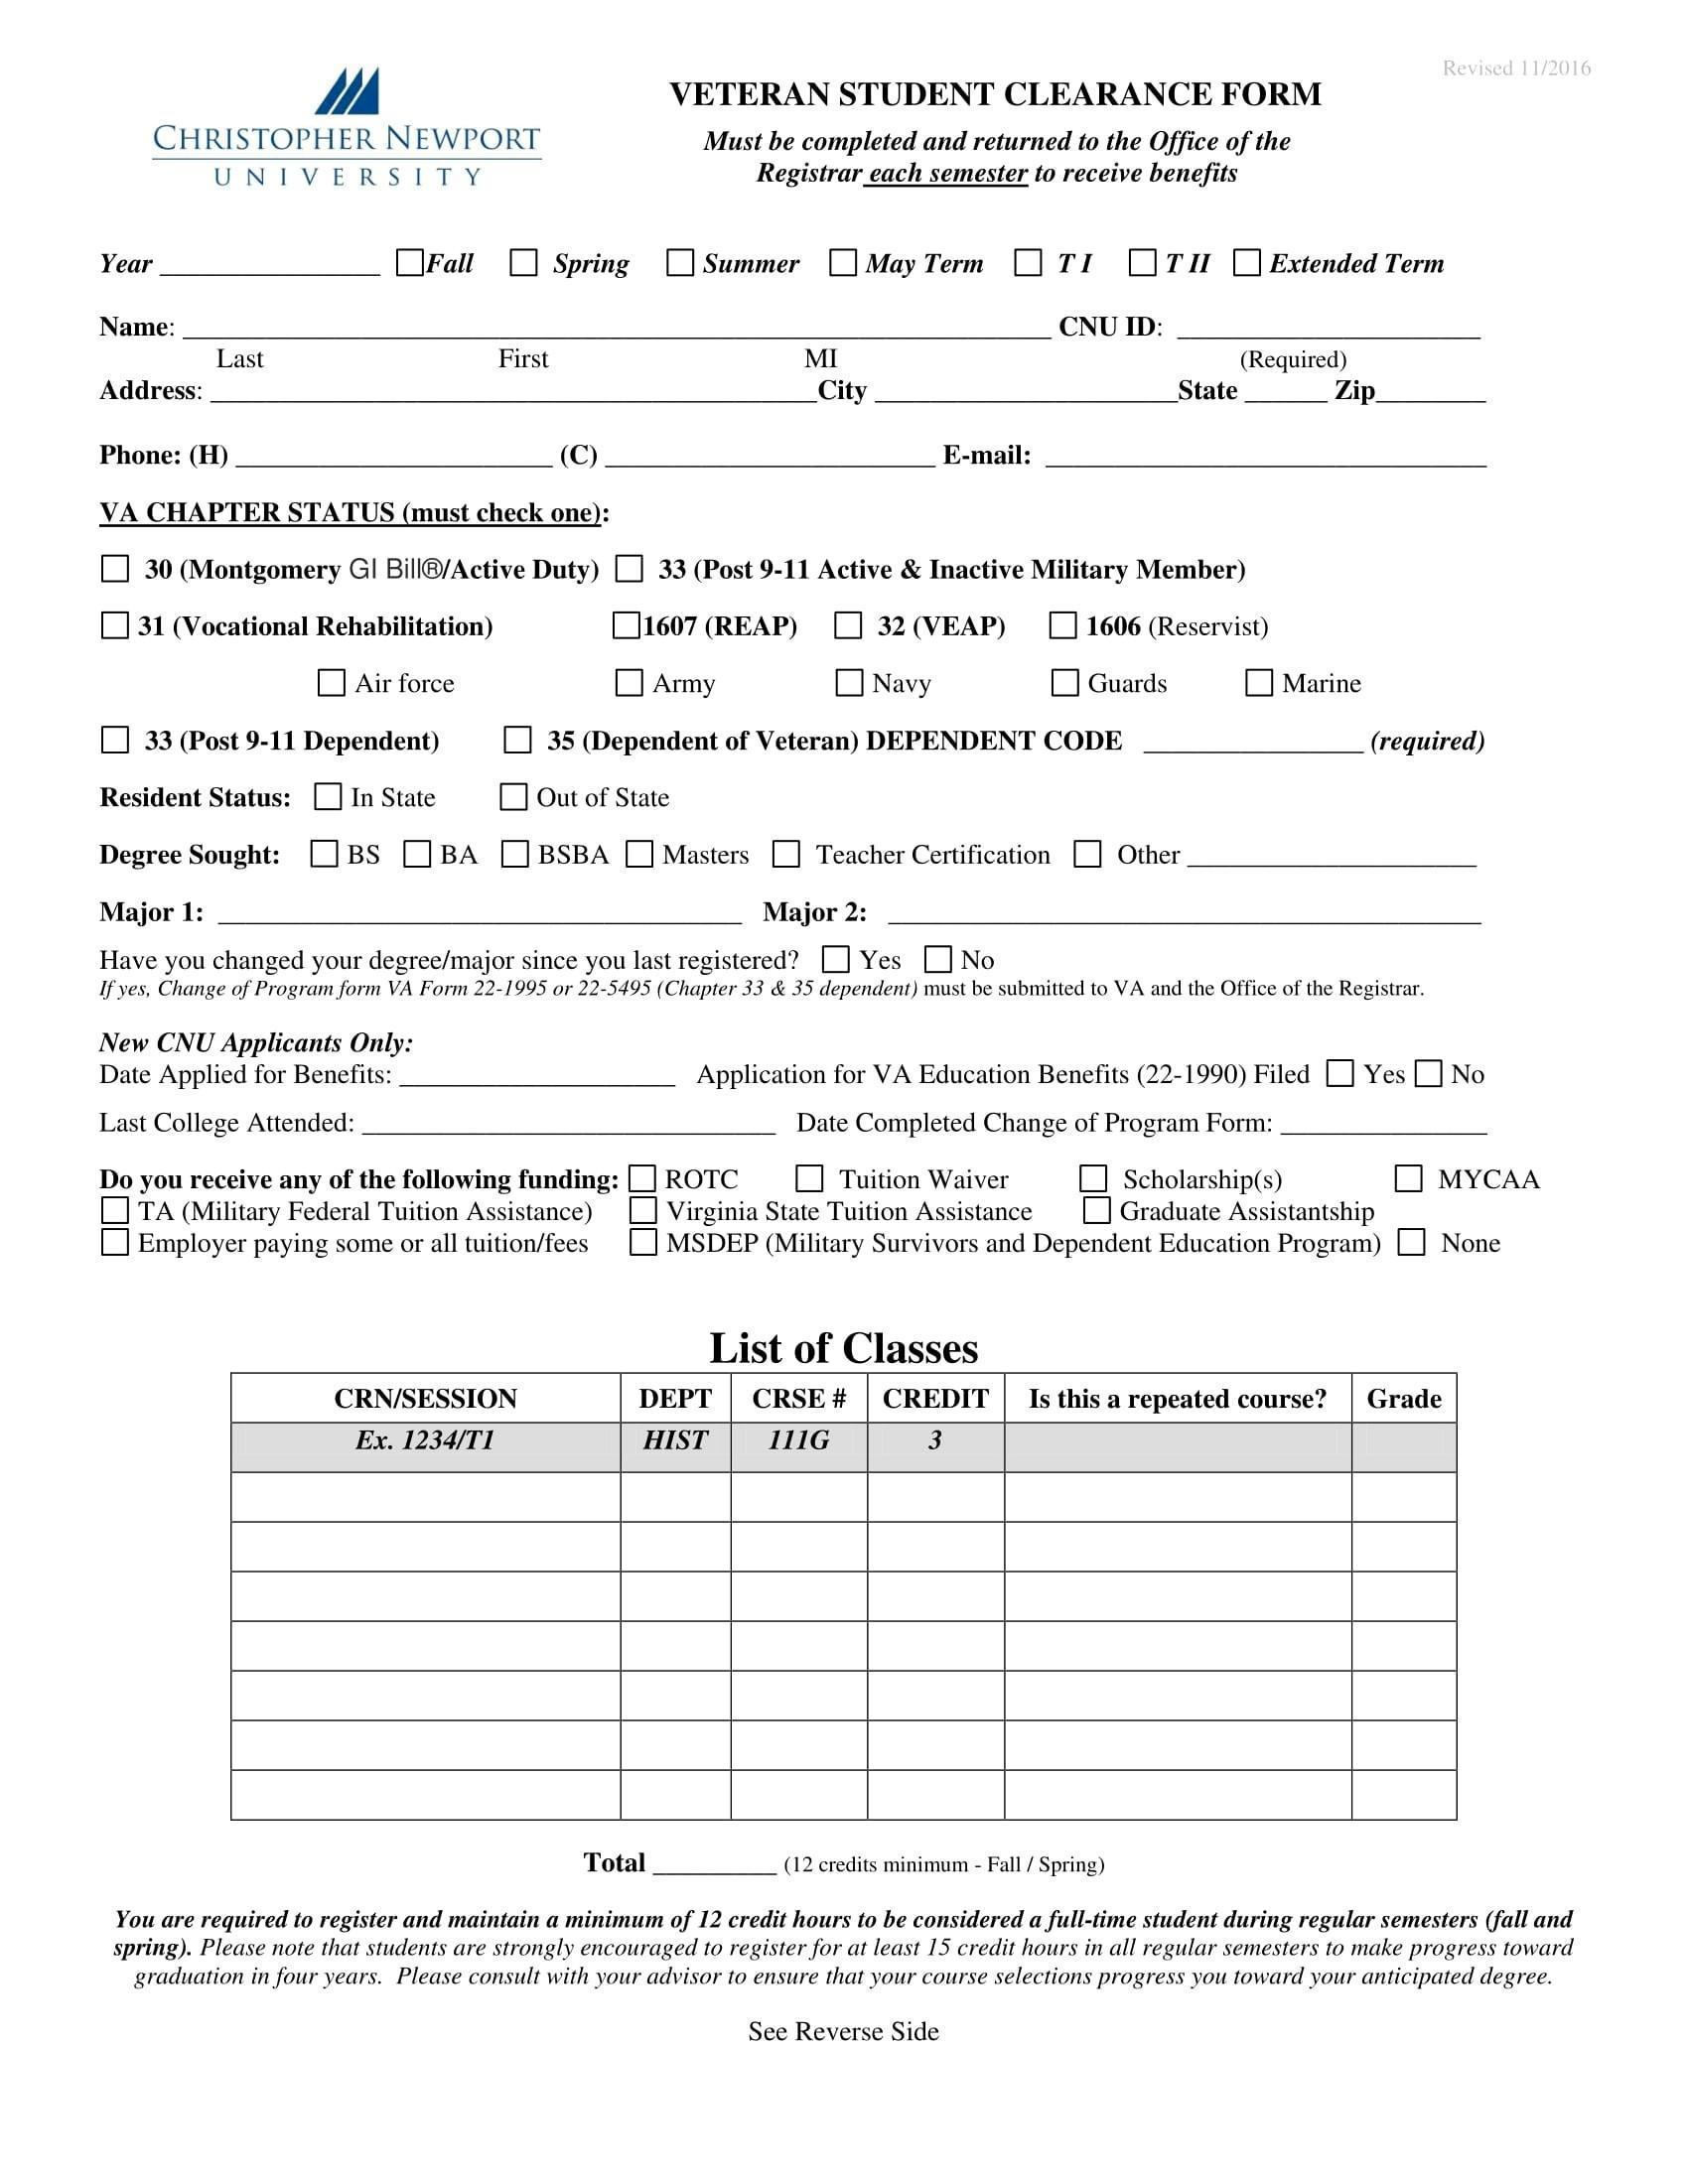 VA Certificate of Eligibility Form